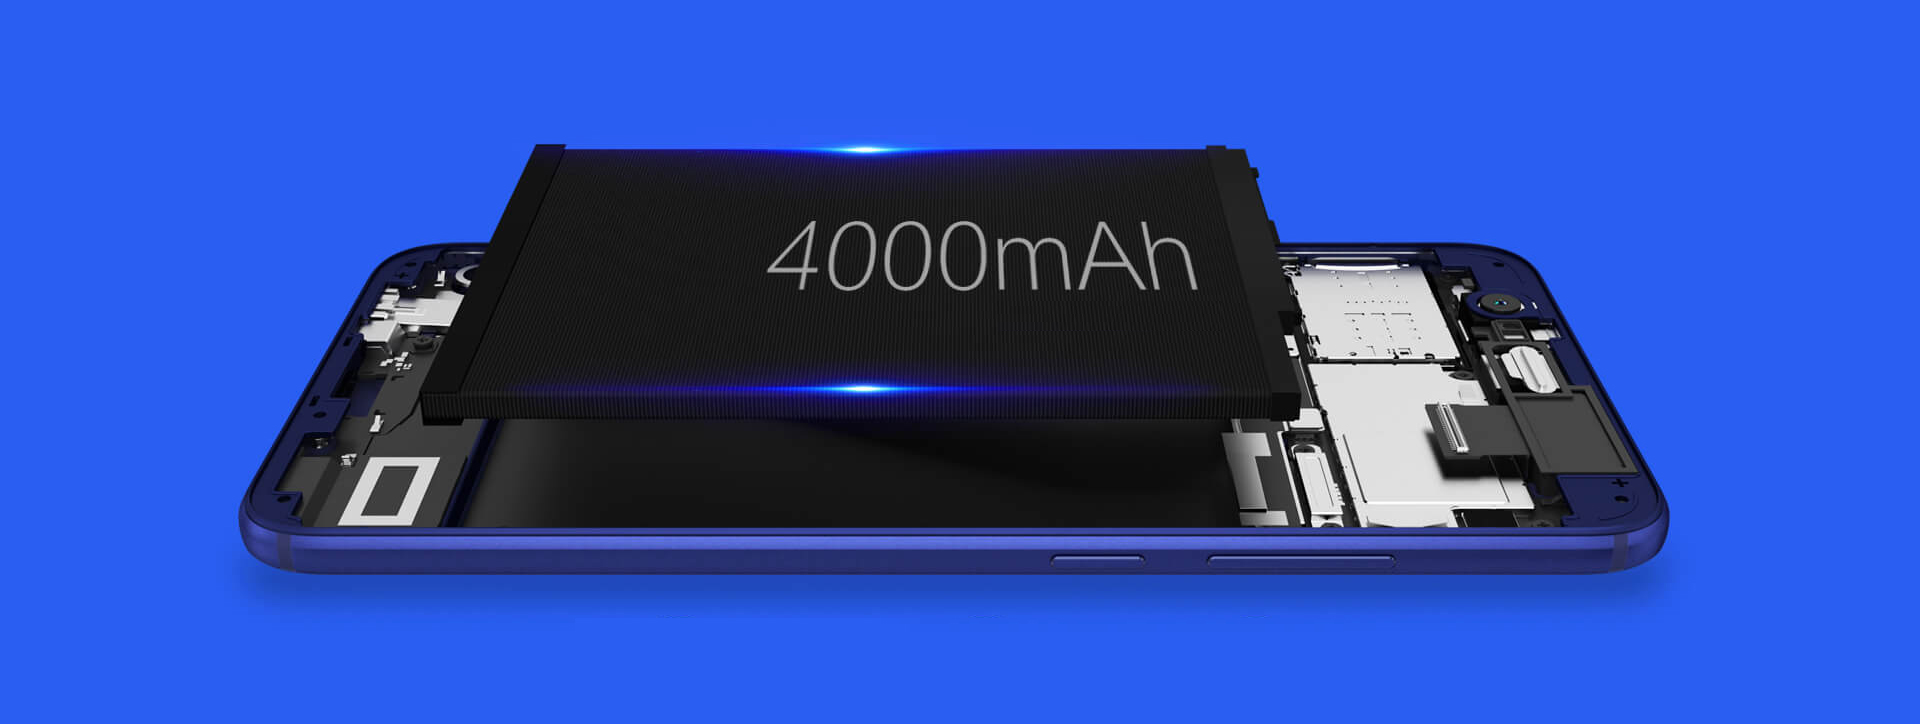 Huawei Honor 8 Pro smartpower 5.0 bateria 4000 maH